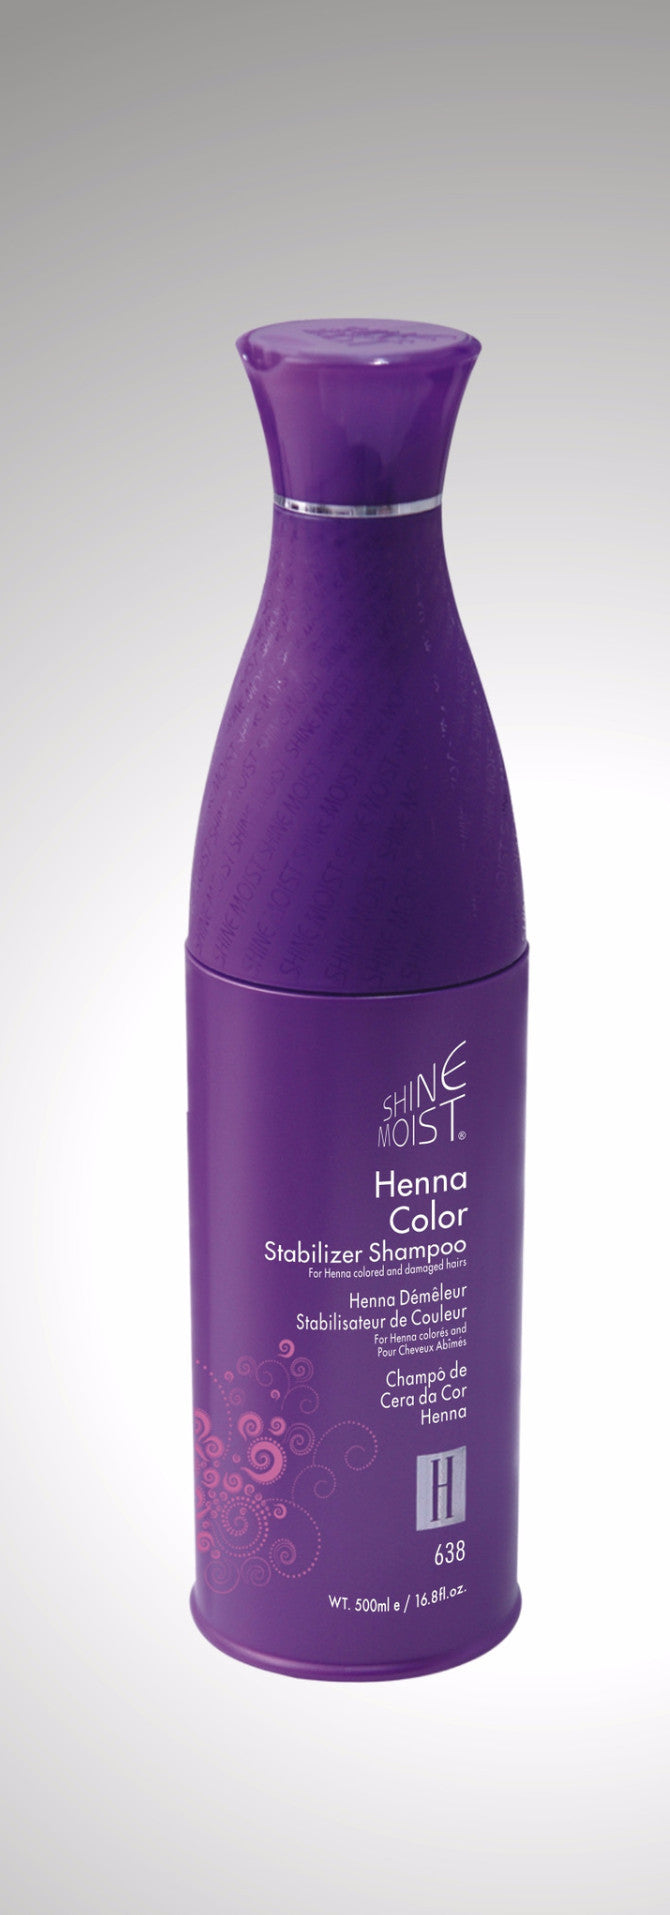 Shine Moist Henna Color Stabilizer Shampoo